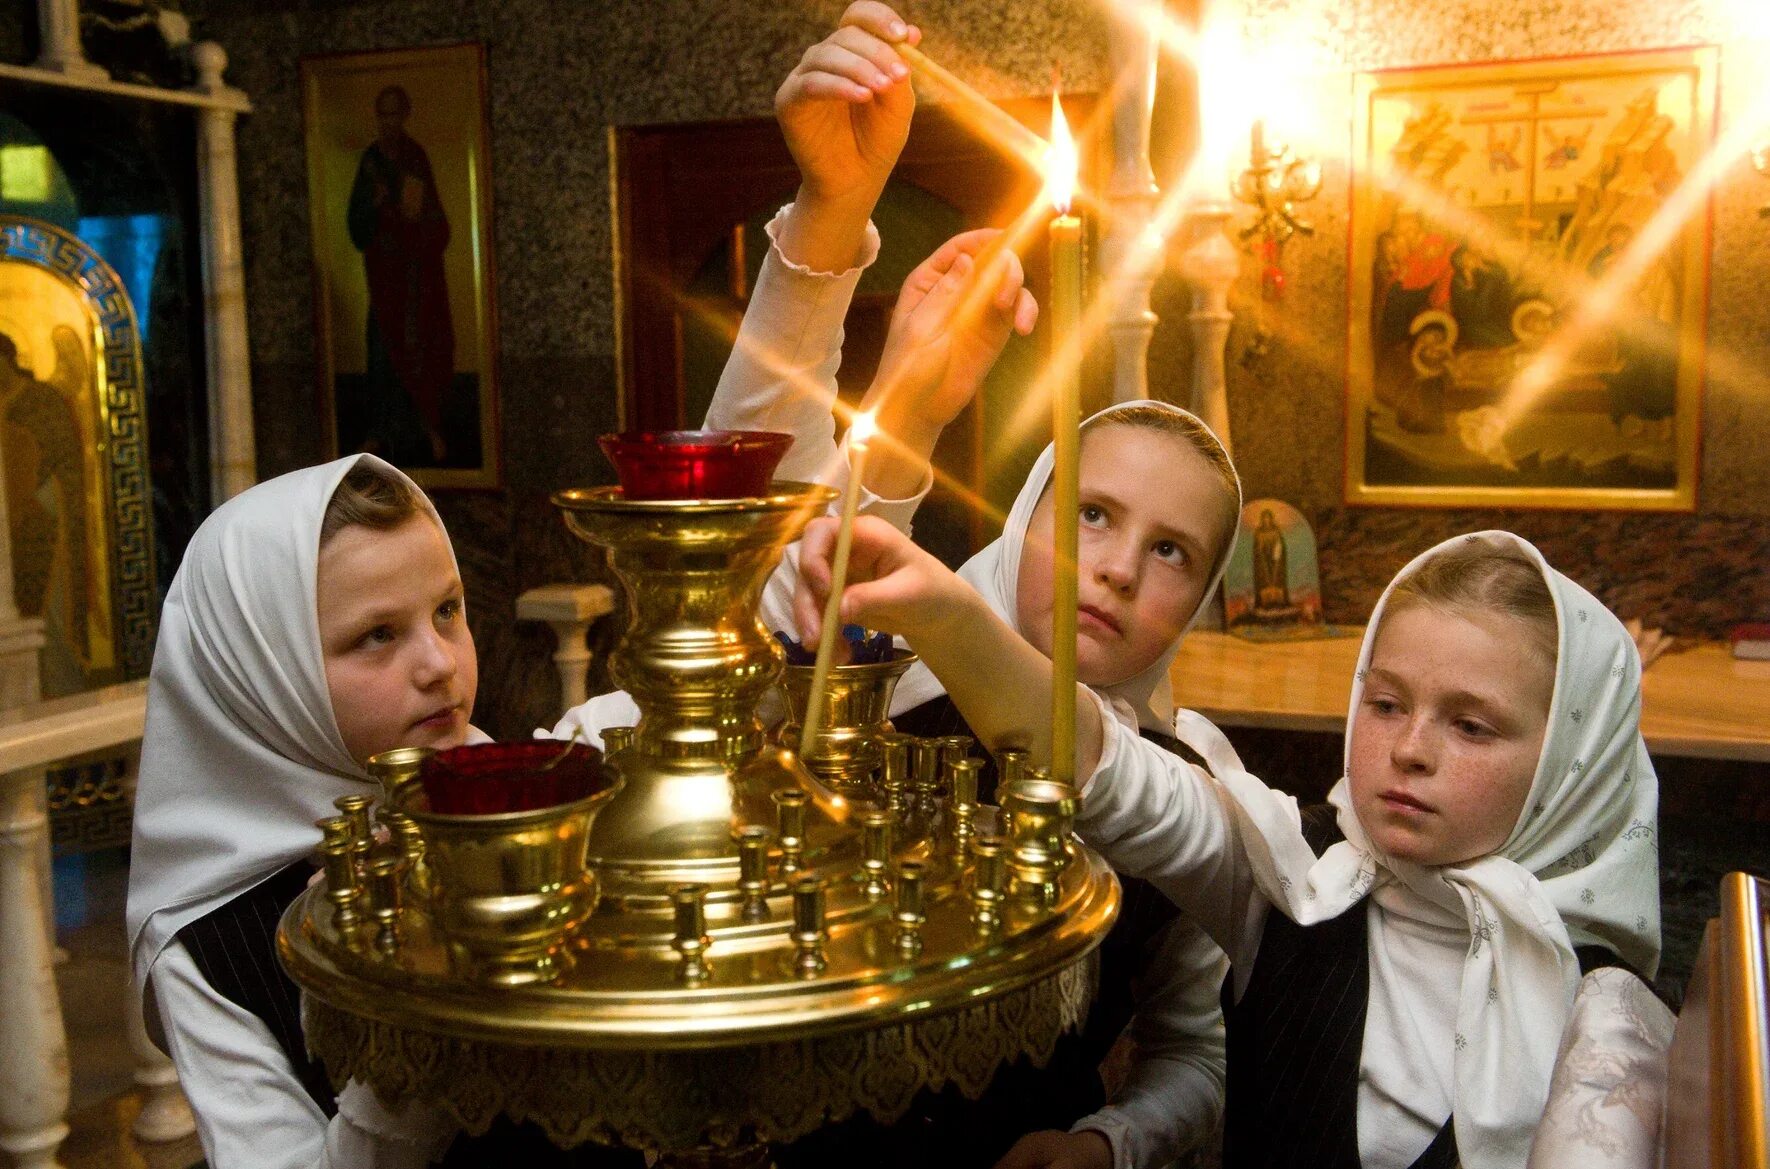 Дети в церкви. Православный храм. Дети в православном храме. Православная семья в храме.